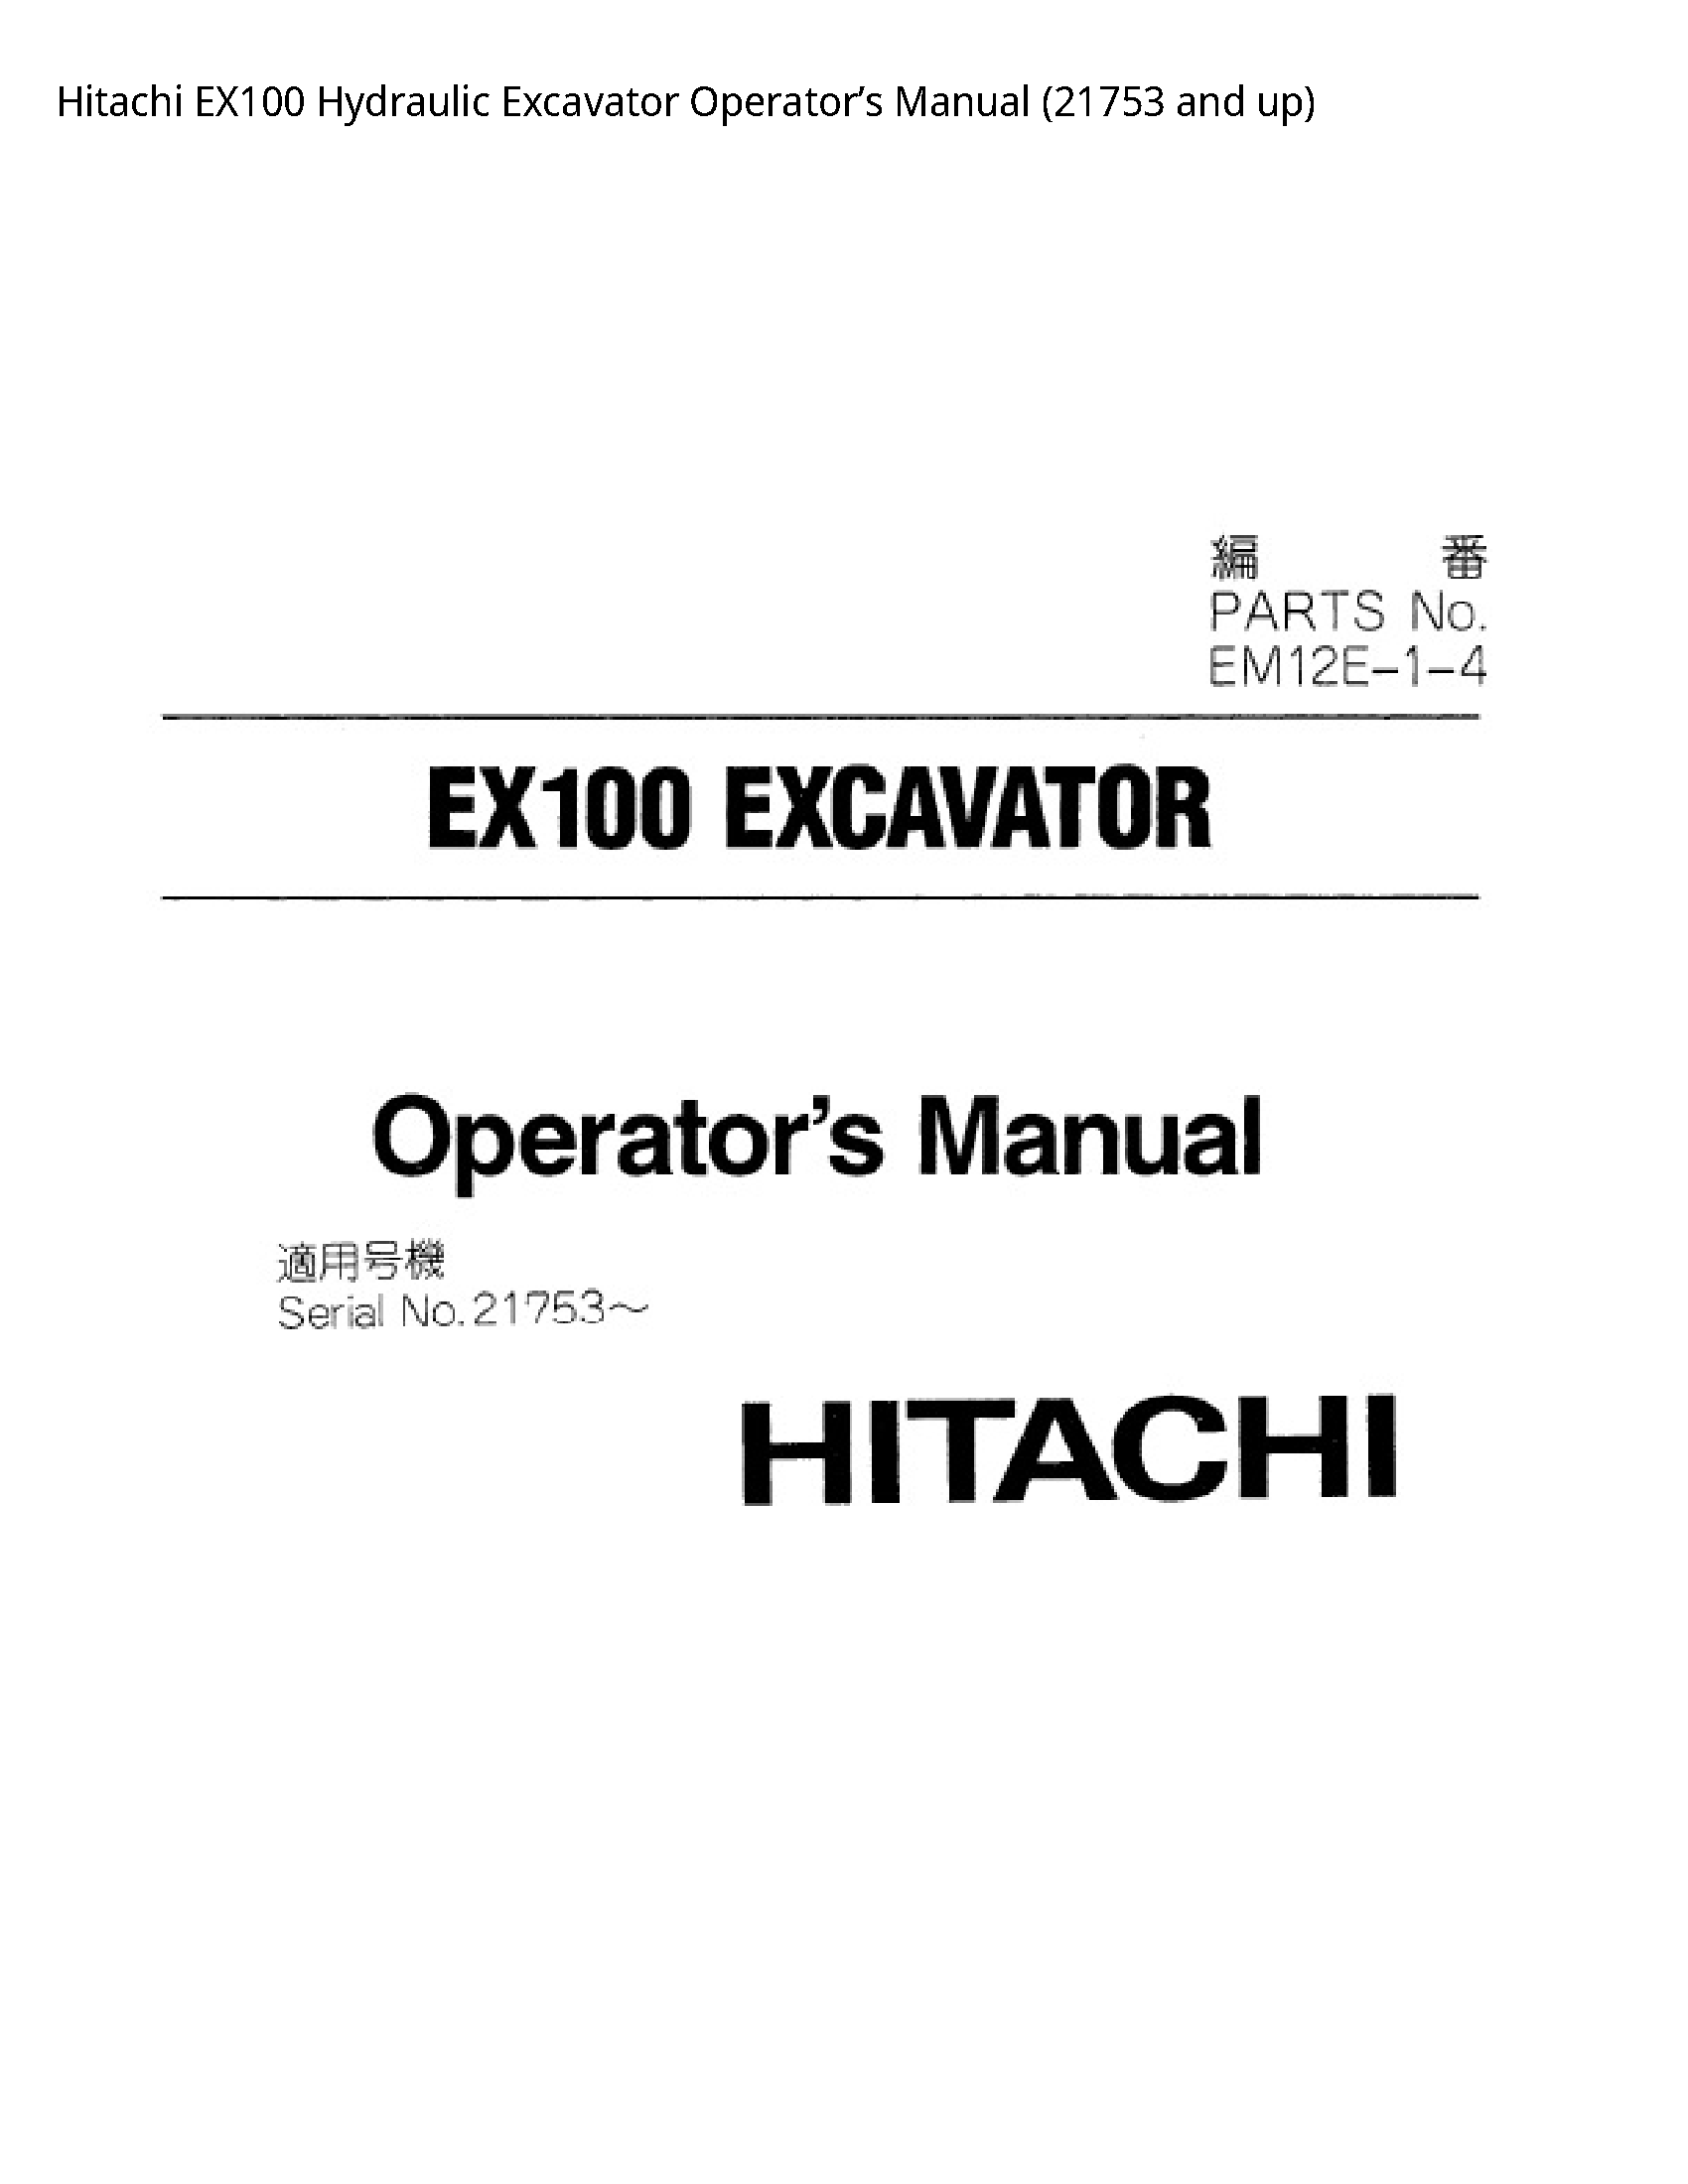 Hitachi EX100 Hydraulic Excavator Operator’s manual